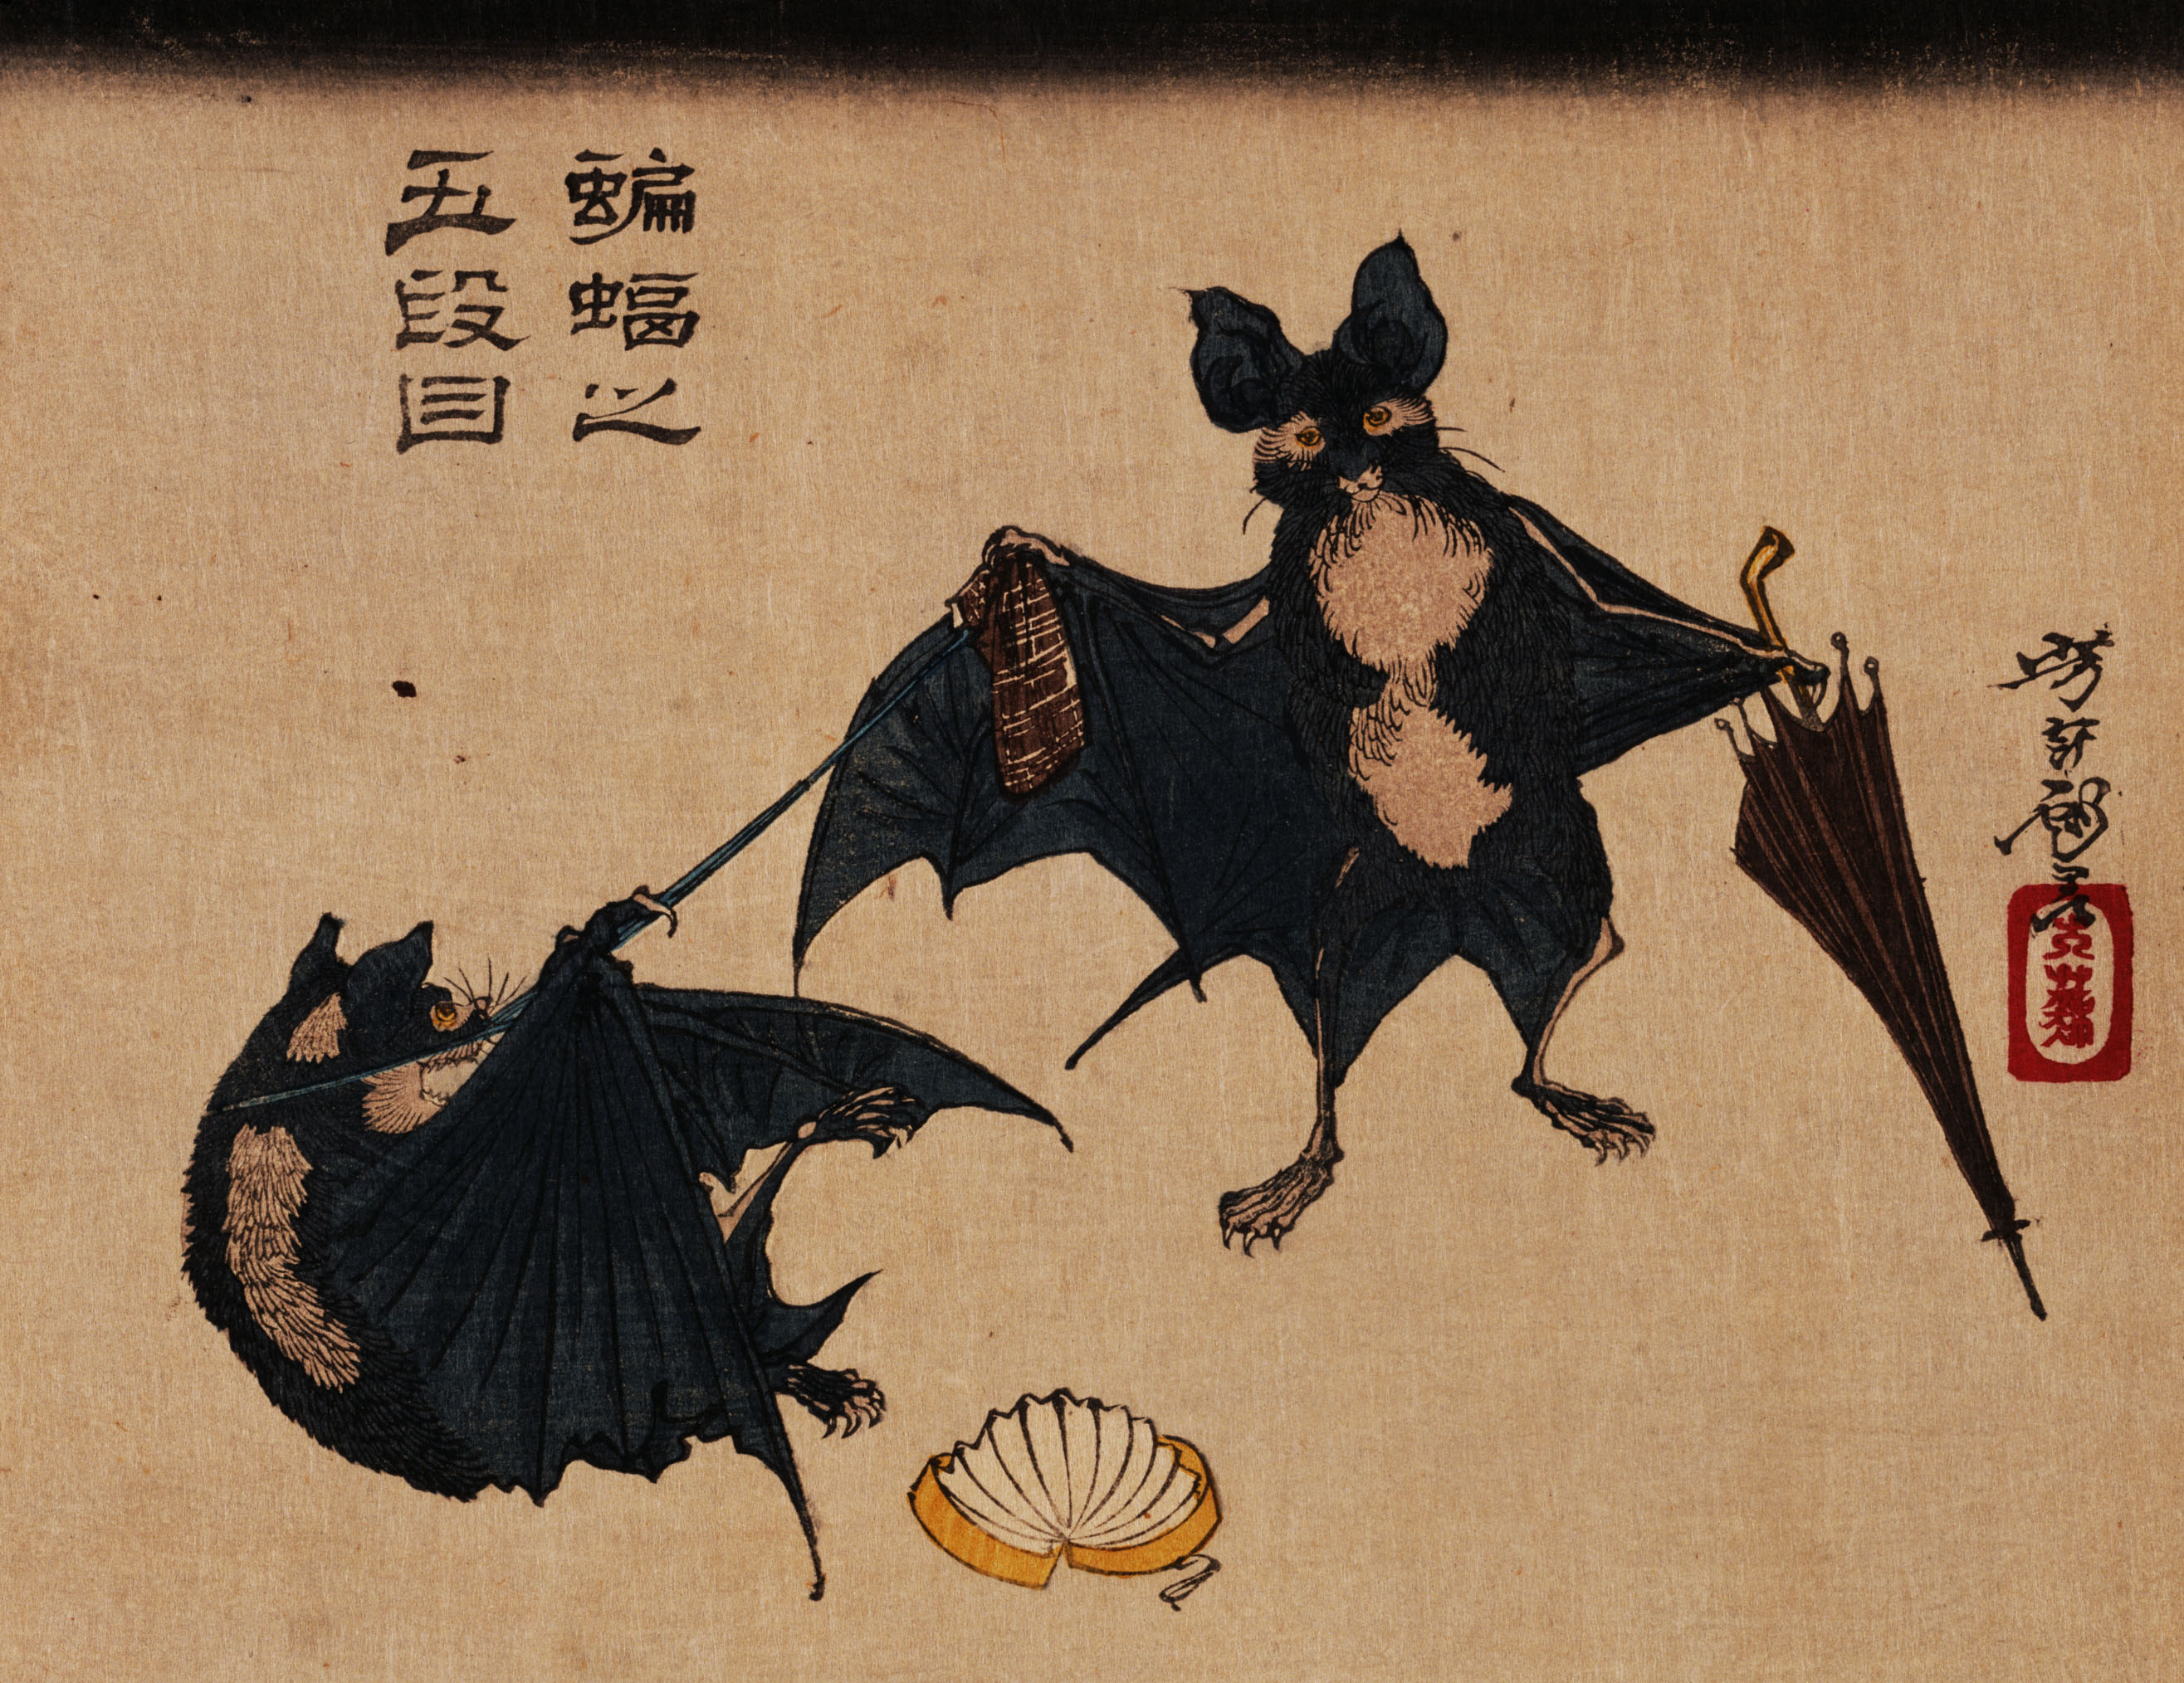 Cute Bats Wallpapers Wallpapers